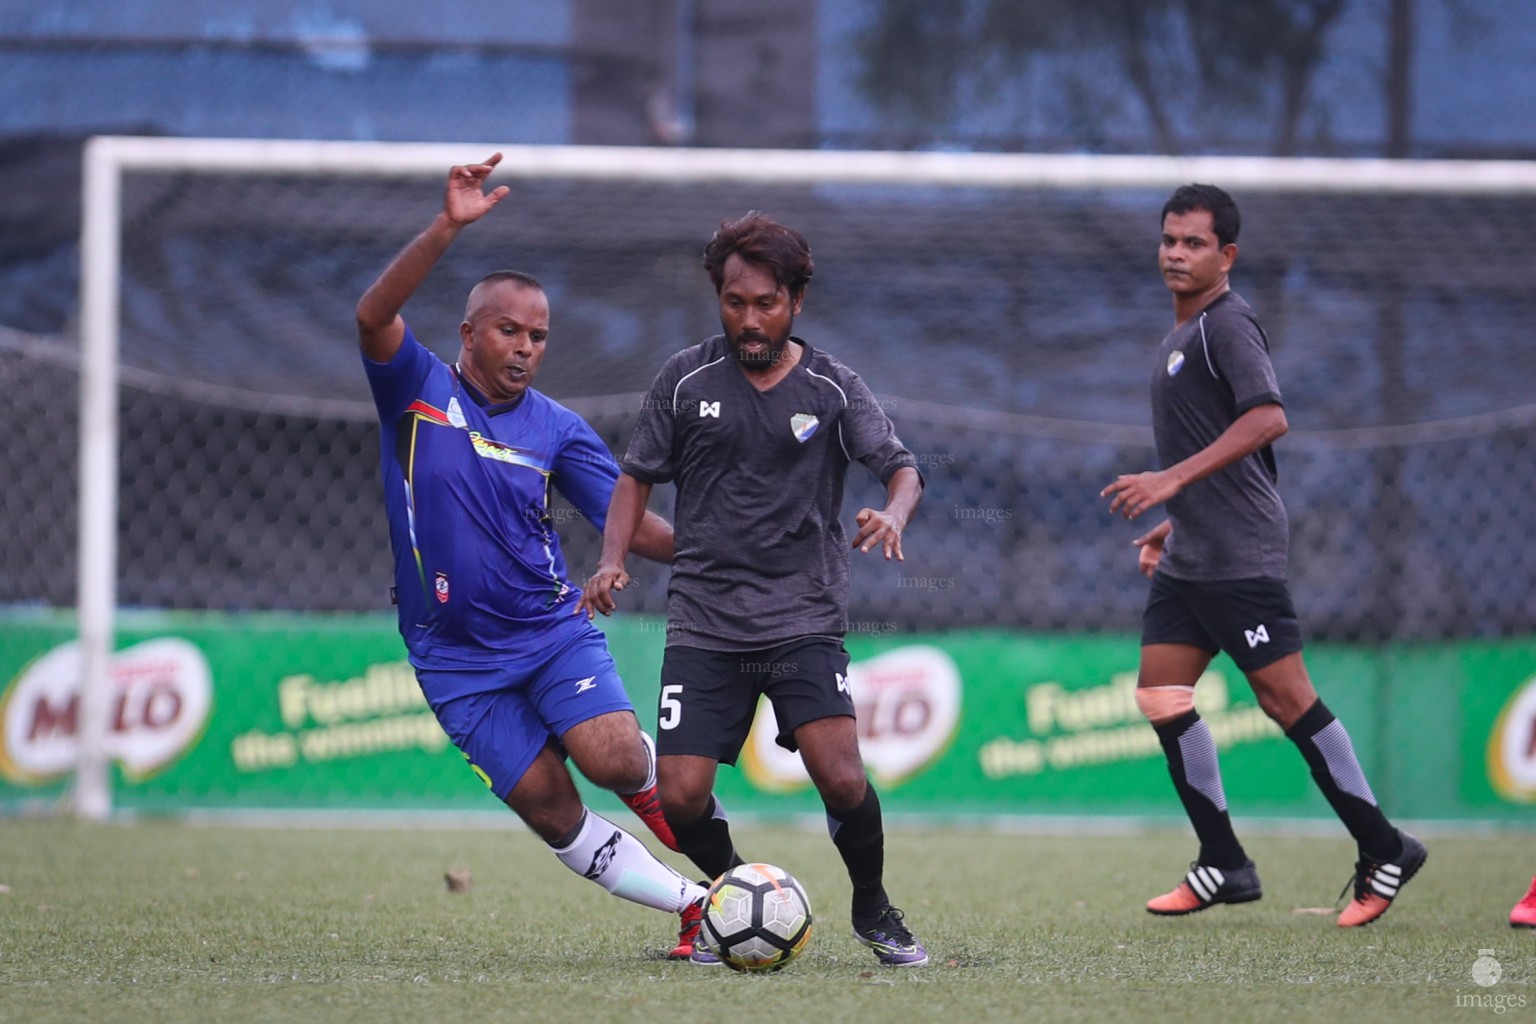 Ramazan Veterans Cup 2018 (Police Club vs DSC)